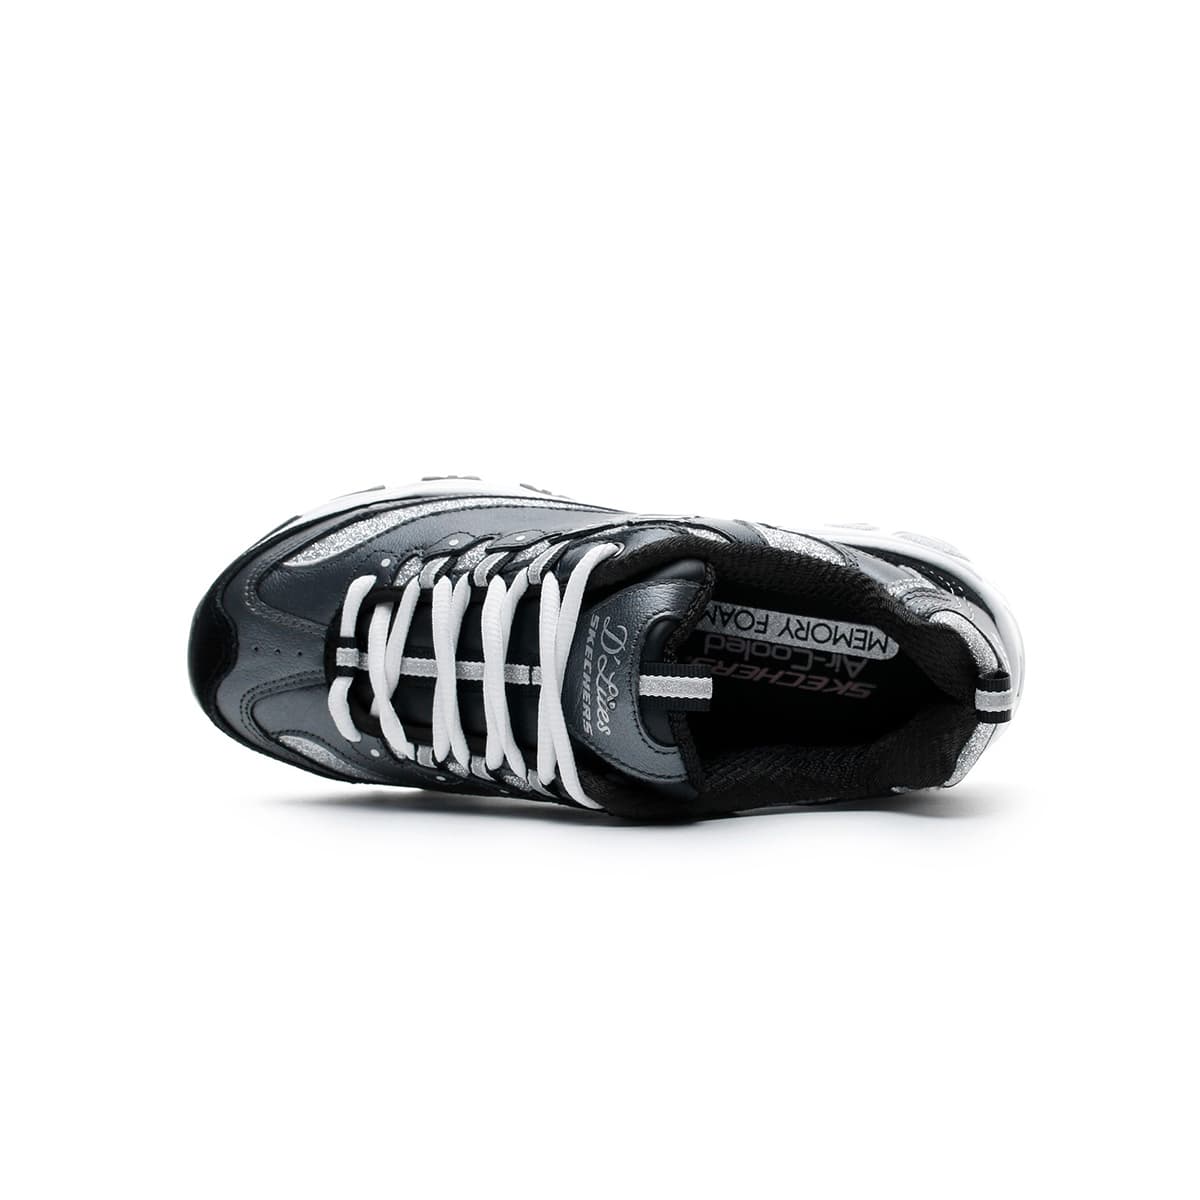 Skechers D'Lites-Glimmer Eve Kadın Siyah Sneakers (13155 BKSL)